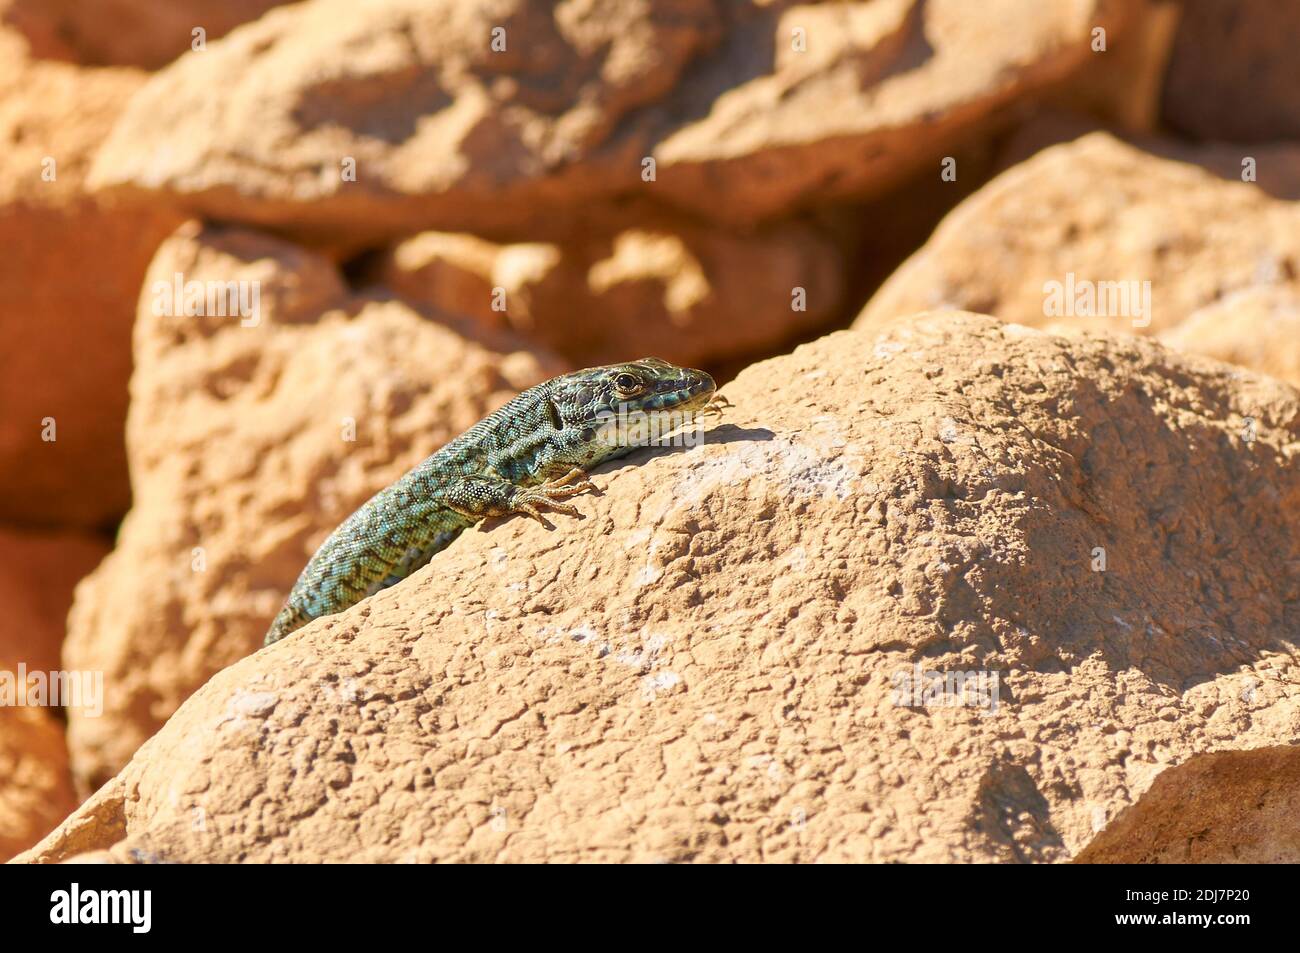 Ibiza wall lizard sub-specie (Podarcis pityusensis formenterae) over a rock in Formentera (Pityusic Islands, Balearic Islands, Spain) Stock Photo